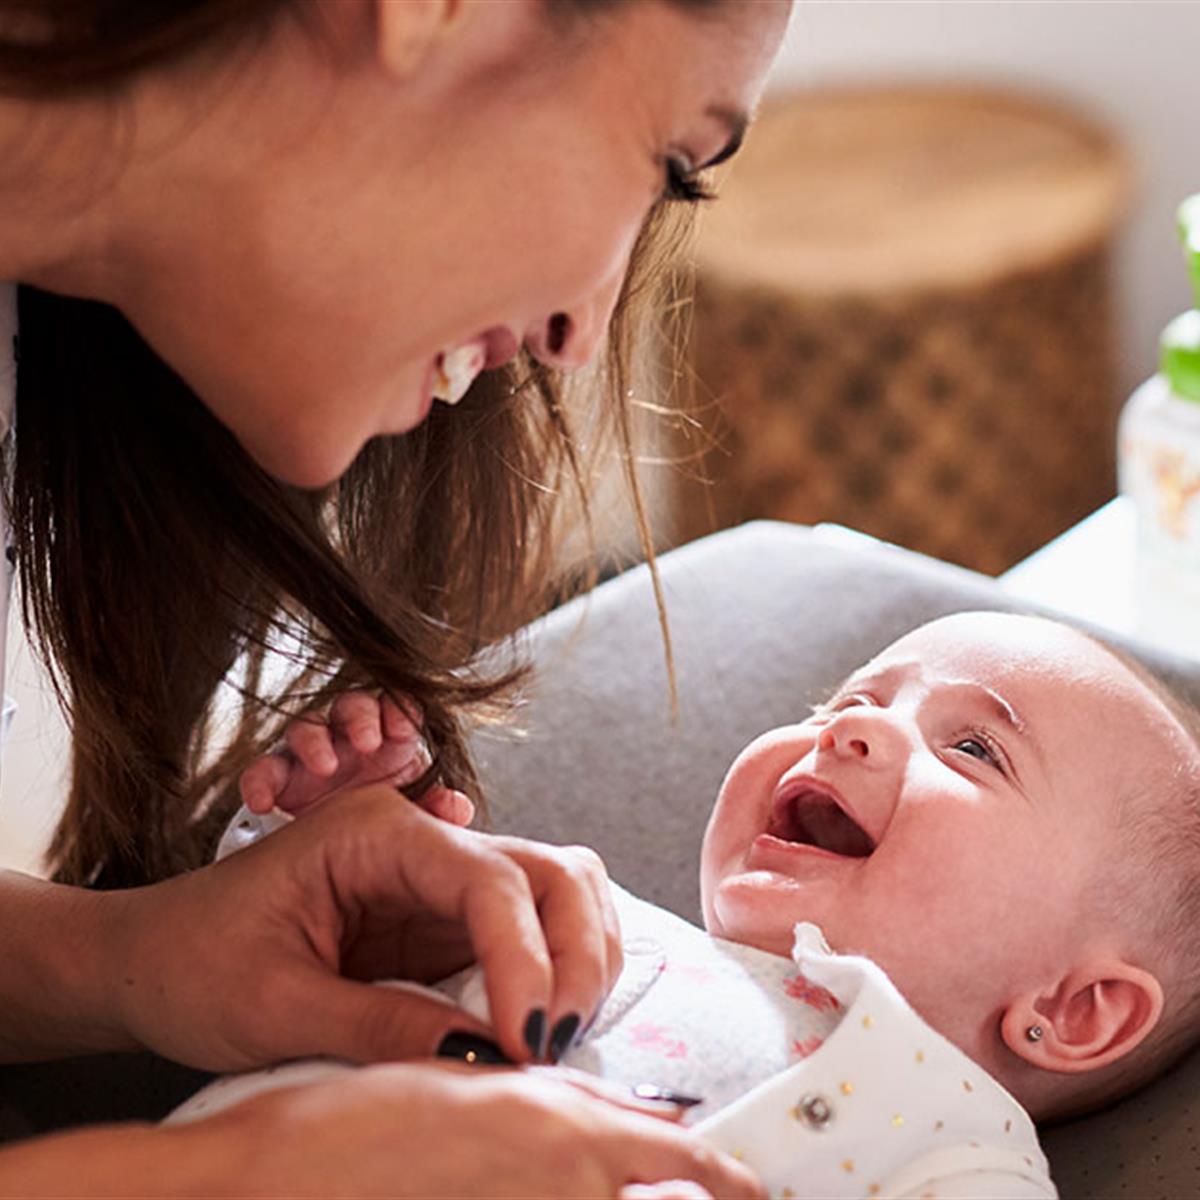 When do babies first smile? - HealthyChildren.org